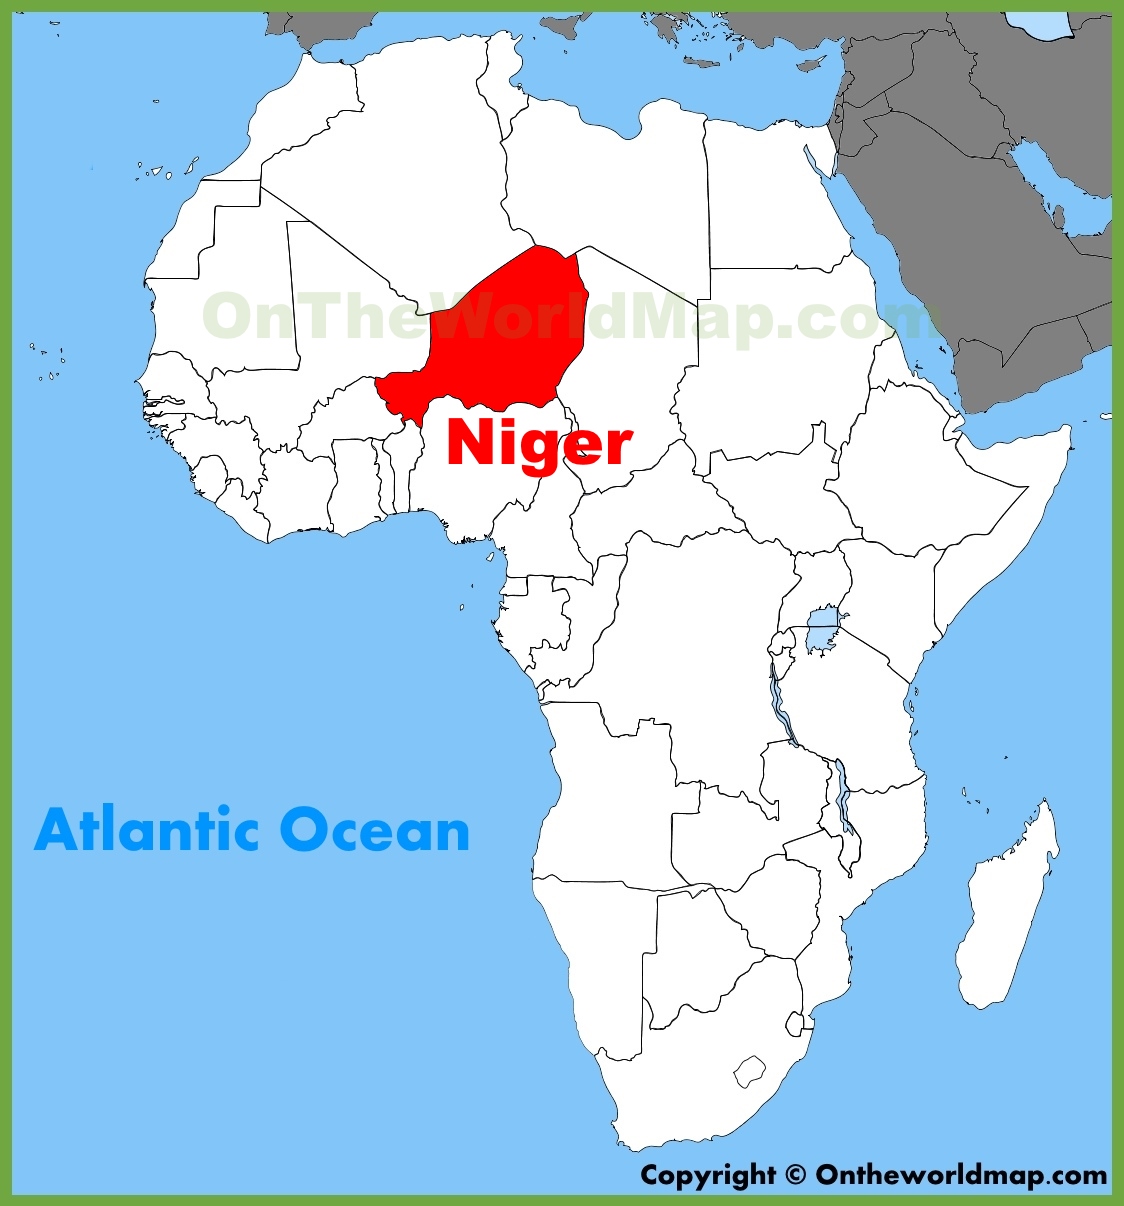 http://ontheworldmap.com/niger/niger-location-on-the-africa-map.jpg